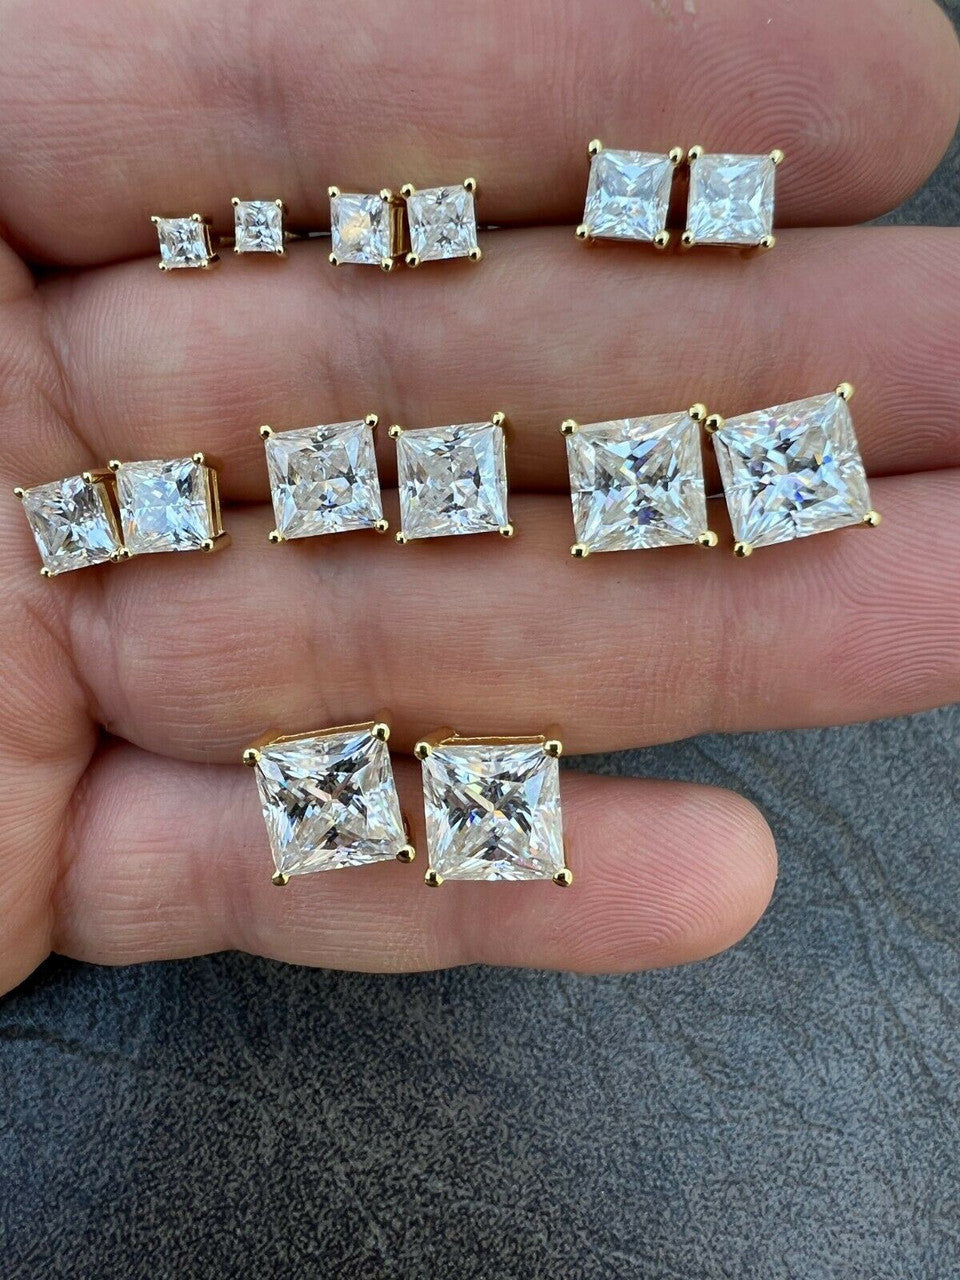 Real MOISSANITE Square Princess Stud Earrings 14k Gold Vermeil Pass Diamond Test